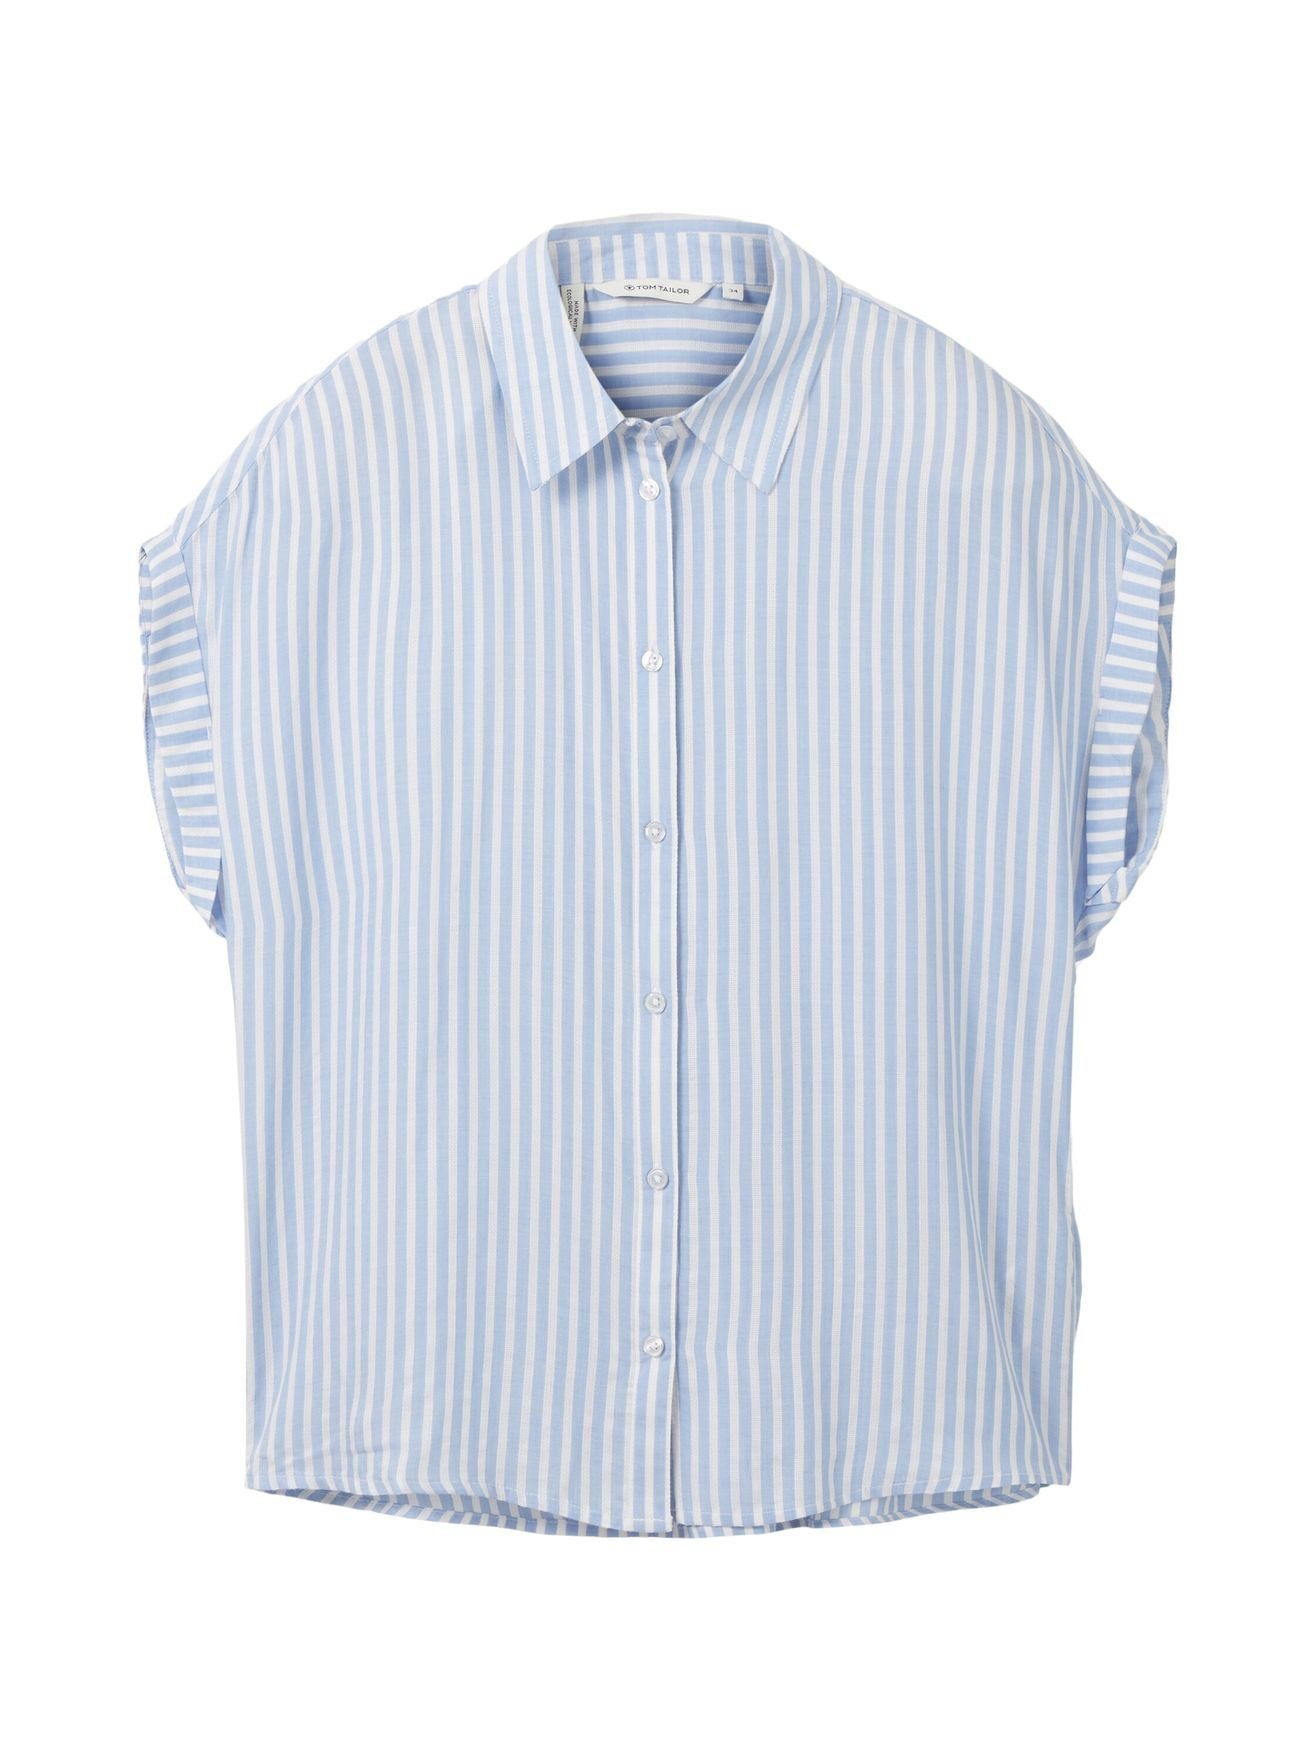 TOM TAILOR Blusenshirt Kurzarm Shirt Bluse 5364 Übergröße Gestreifte in Blau